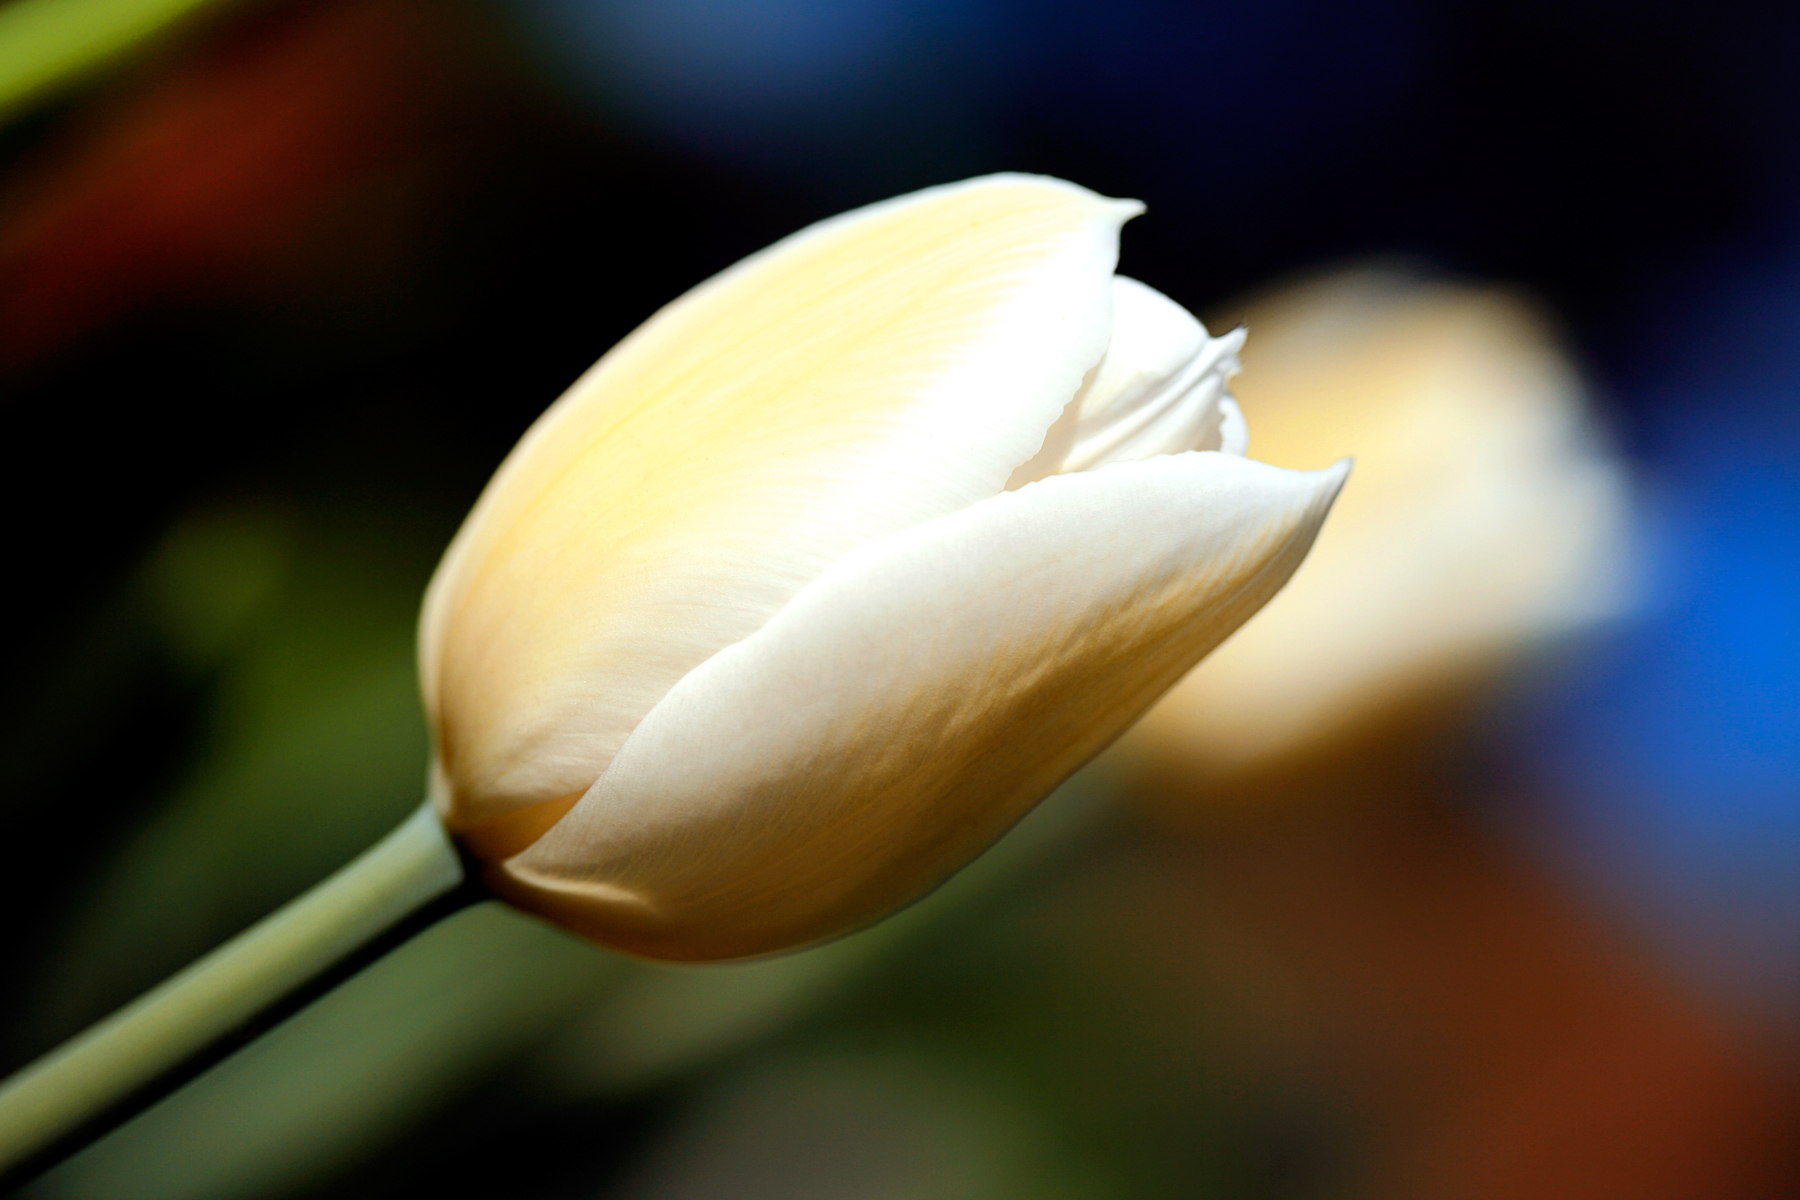 White tulip photo